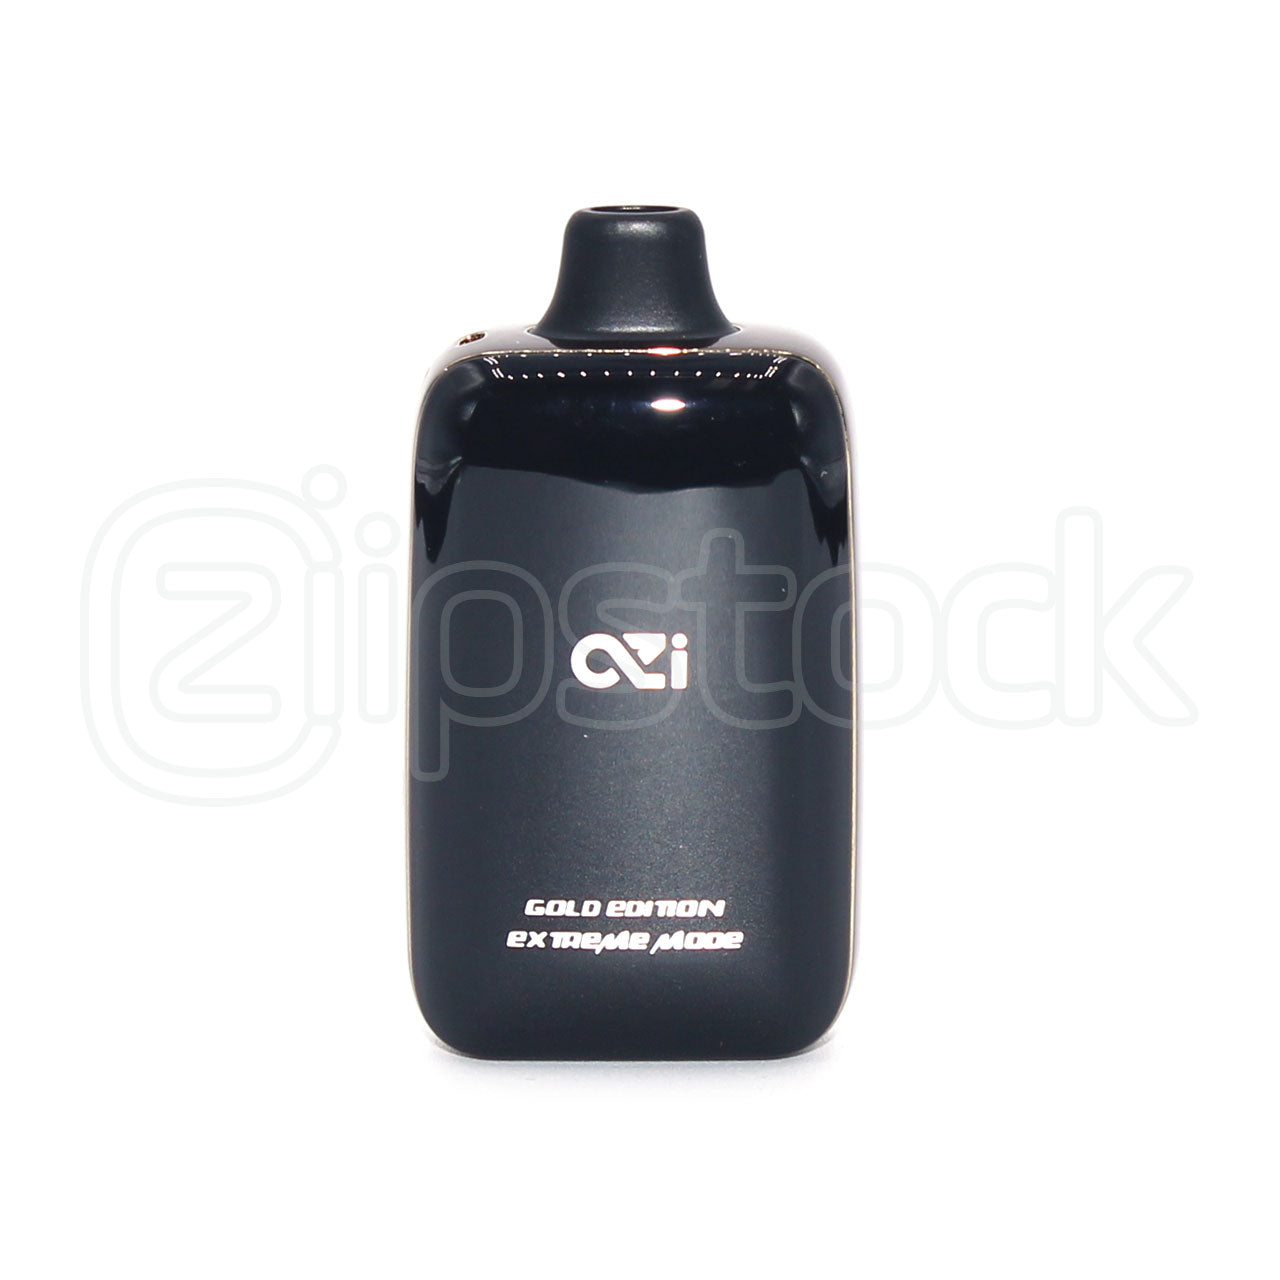 Ozibar OB 18000 Disposable Vape 